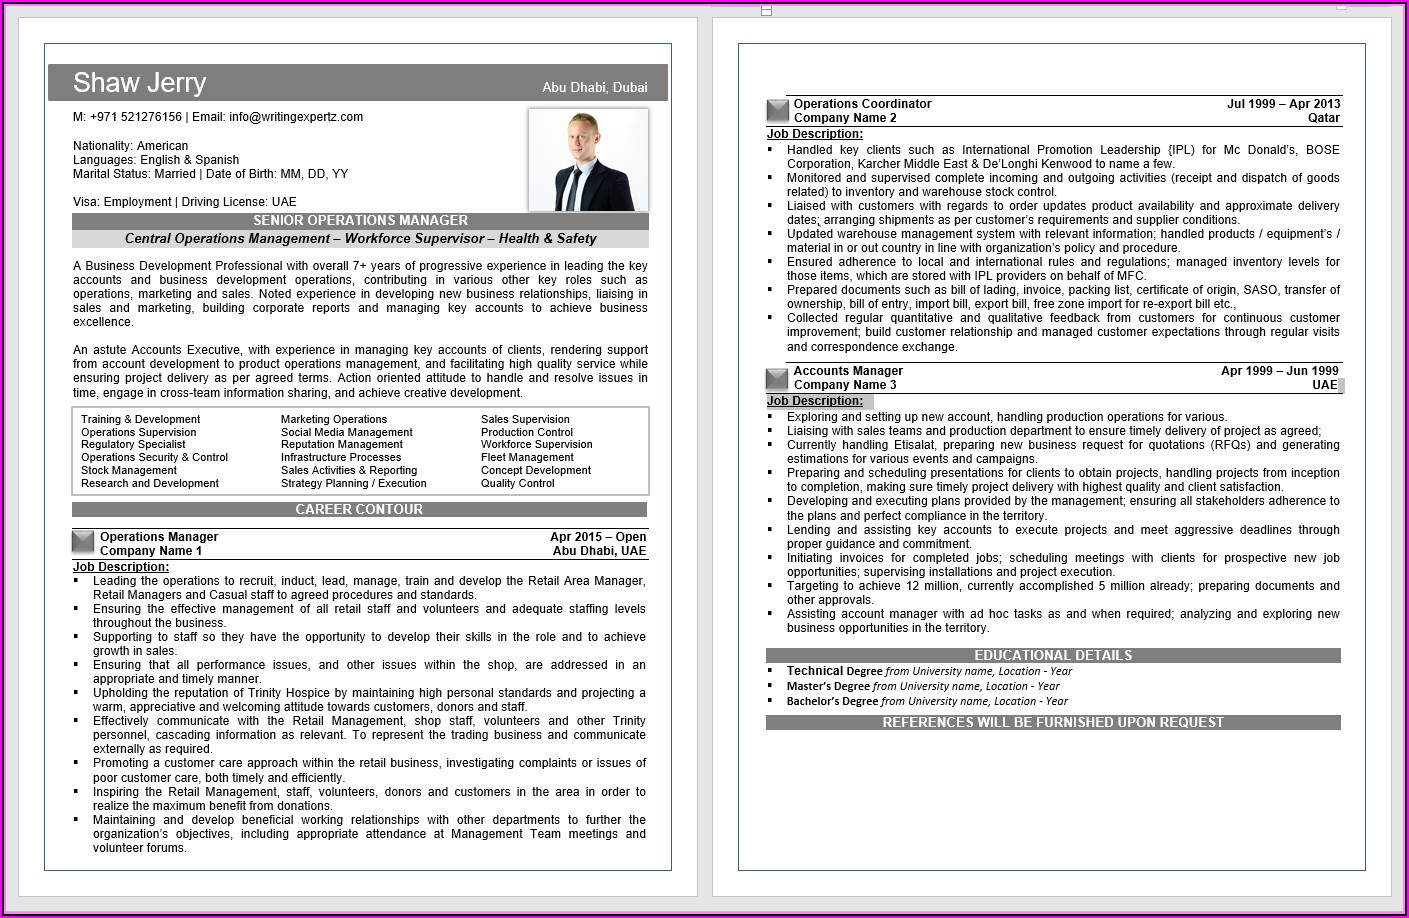 Optimus Professional Cv Writing & Resume Writing Services In Dubai Uae Www.optmc.com